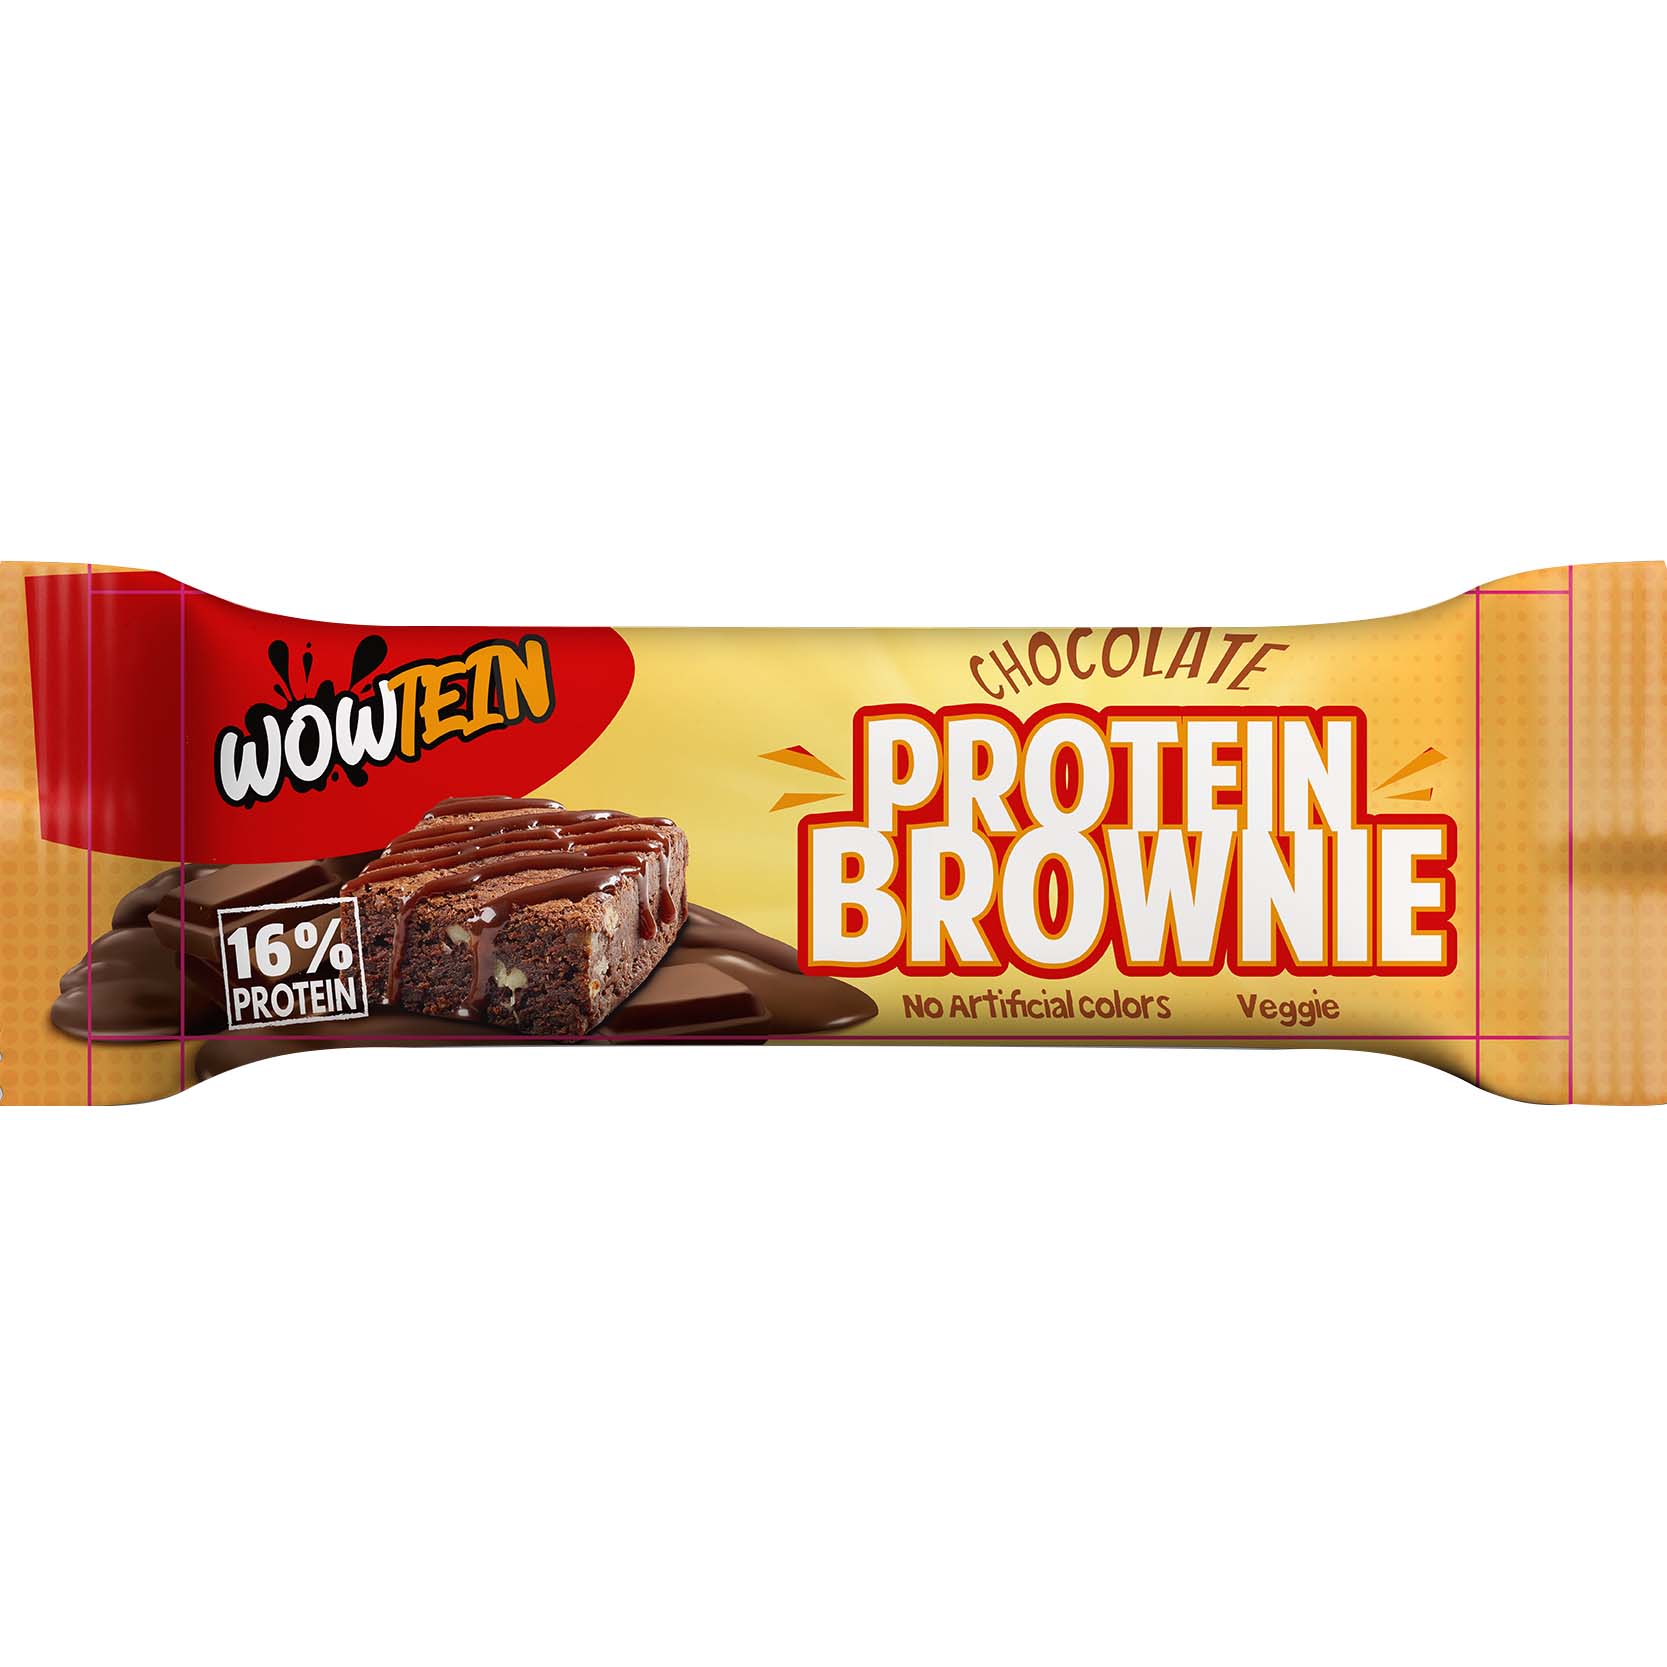 Wowtein Chocolate Brownie Protein, Chocolate Brownie, 1 Bar